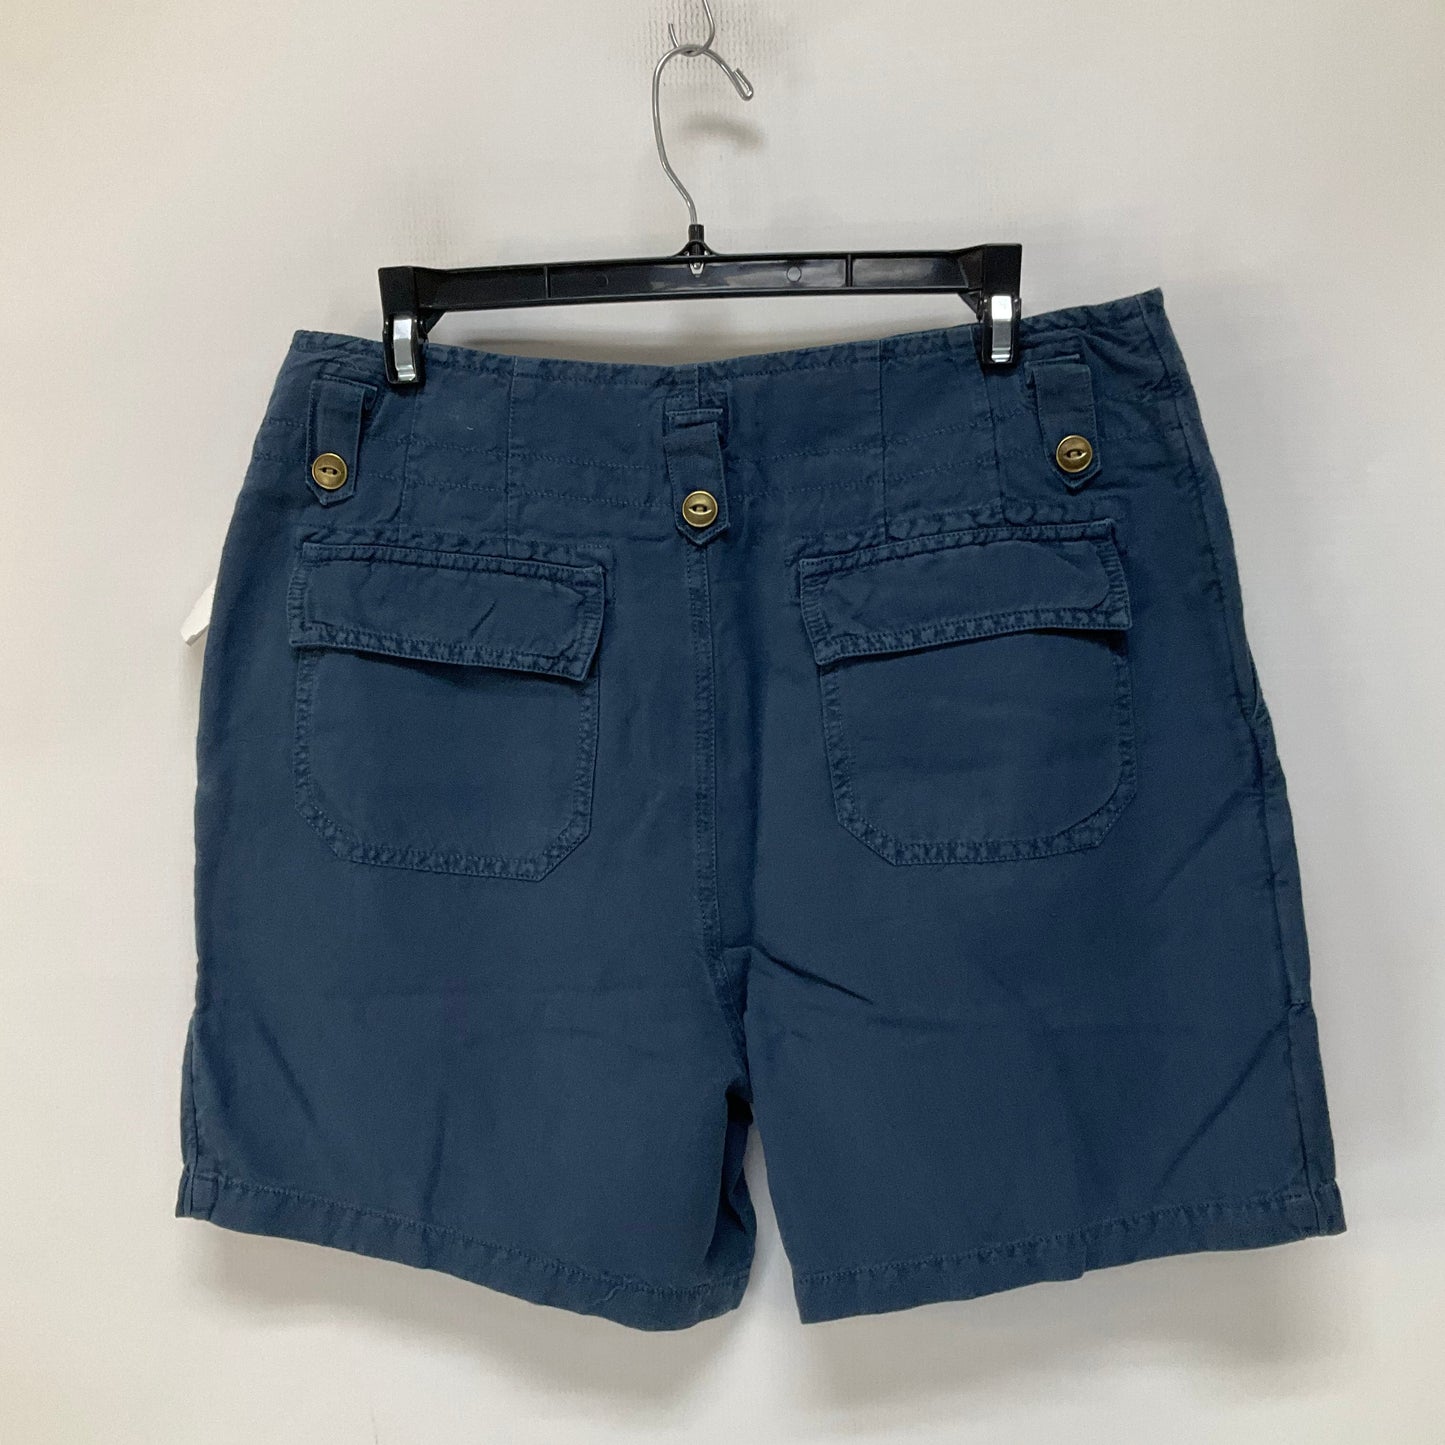 Blue Shorts Sundance, Size 8